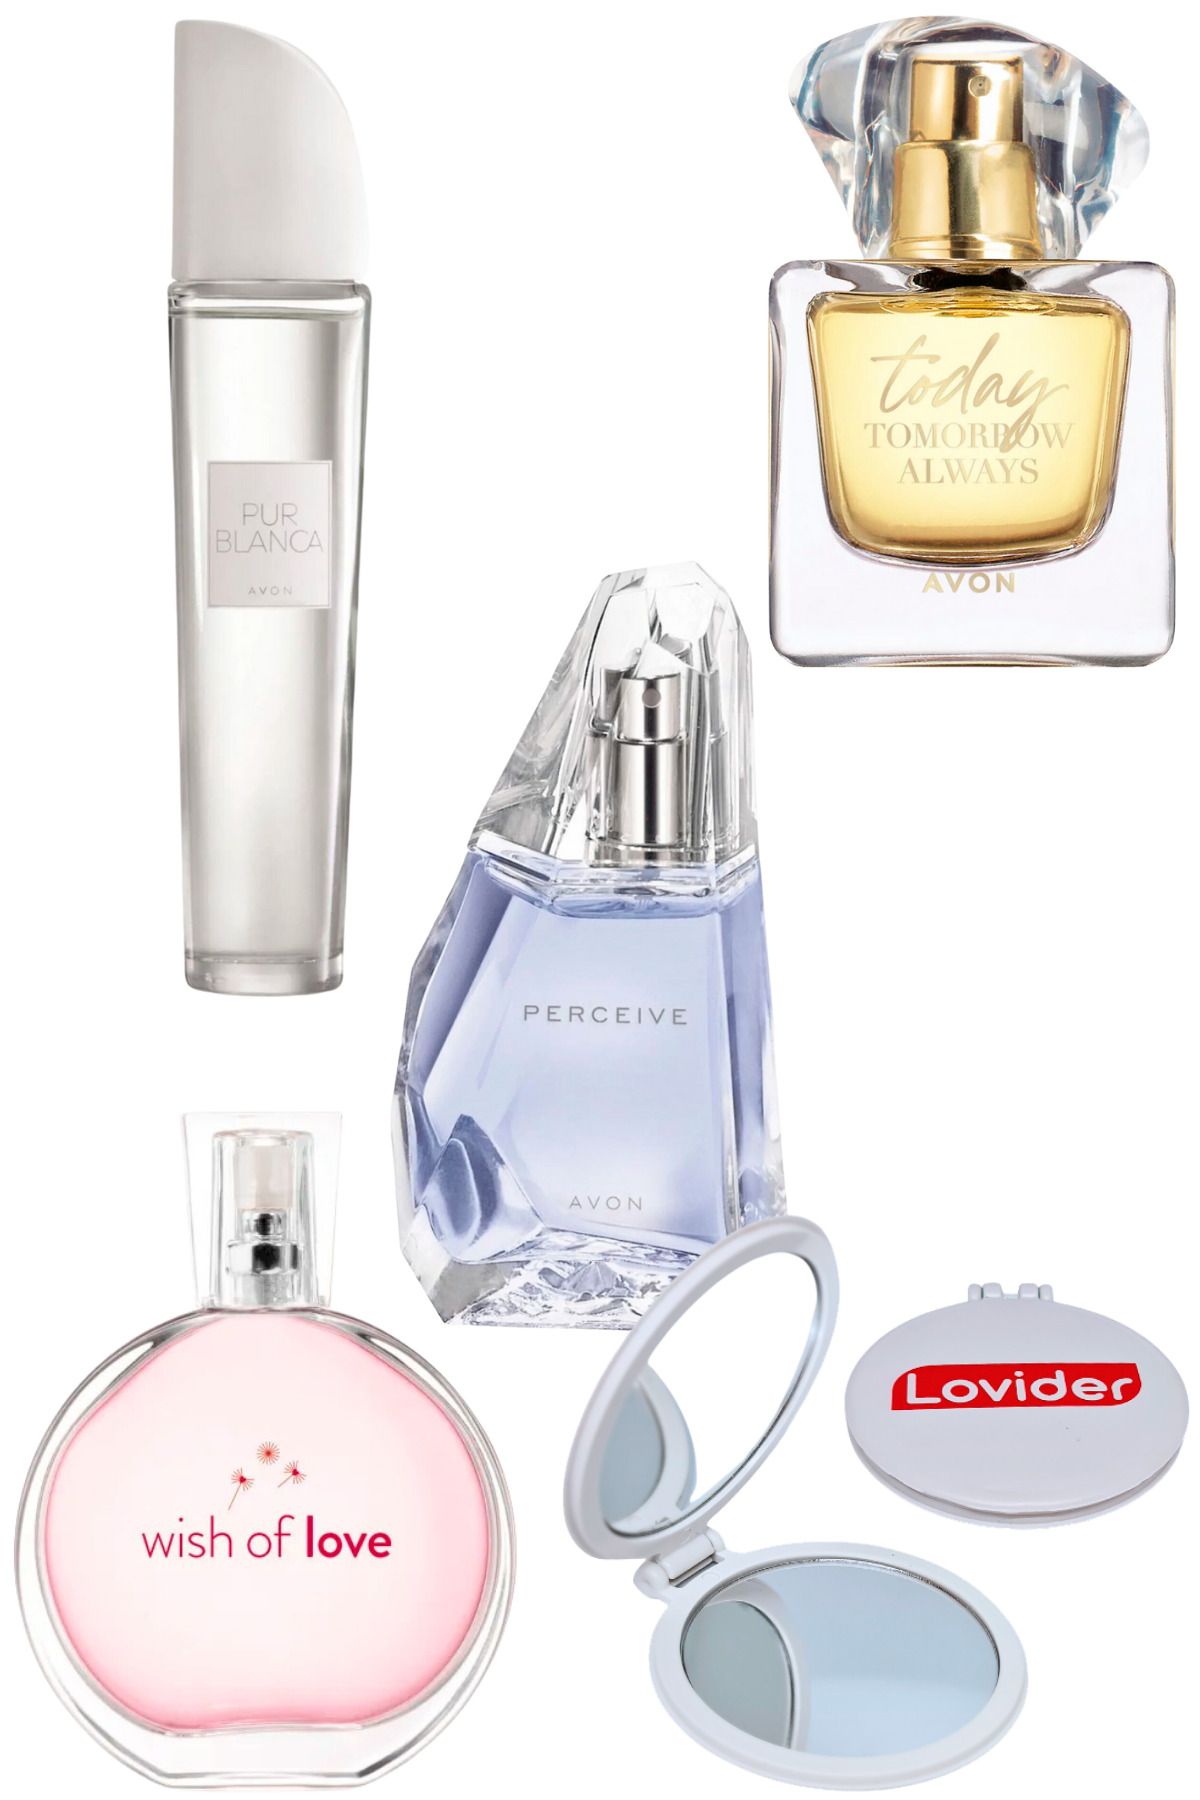 Avon Kadın Parfüm Seti; Pur Blanca + Wish Of Love + Perceive + TTA Today + Lovider Cep Aynası